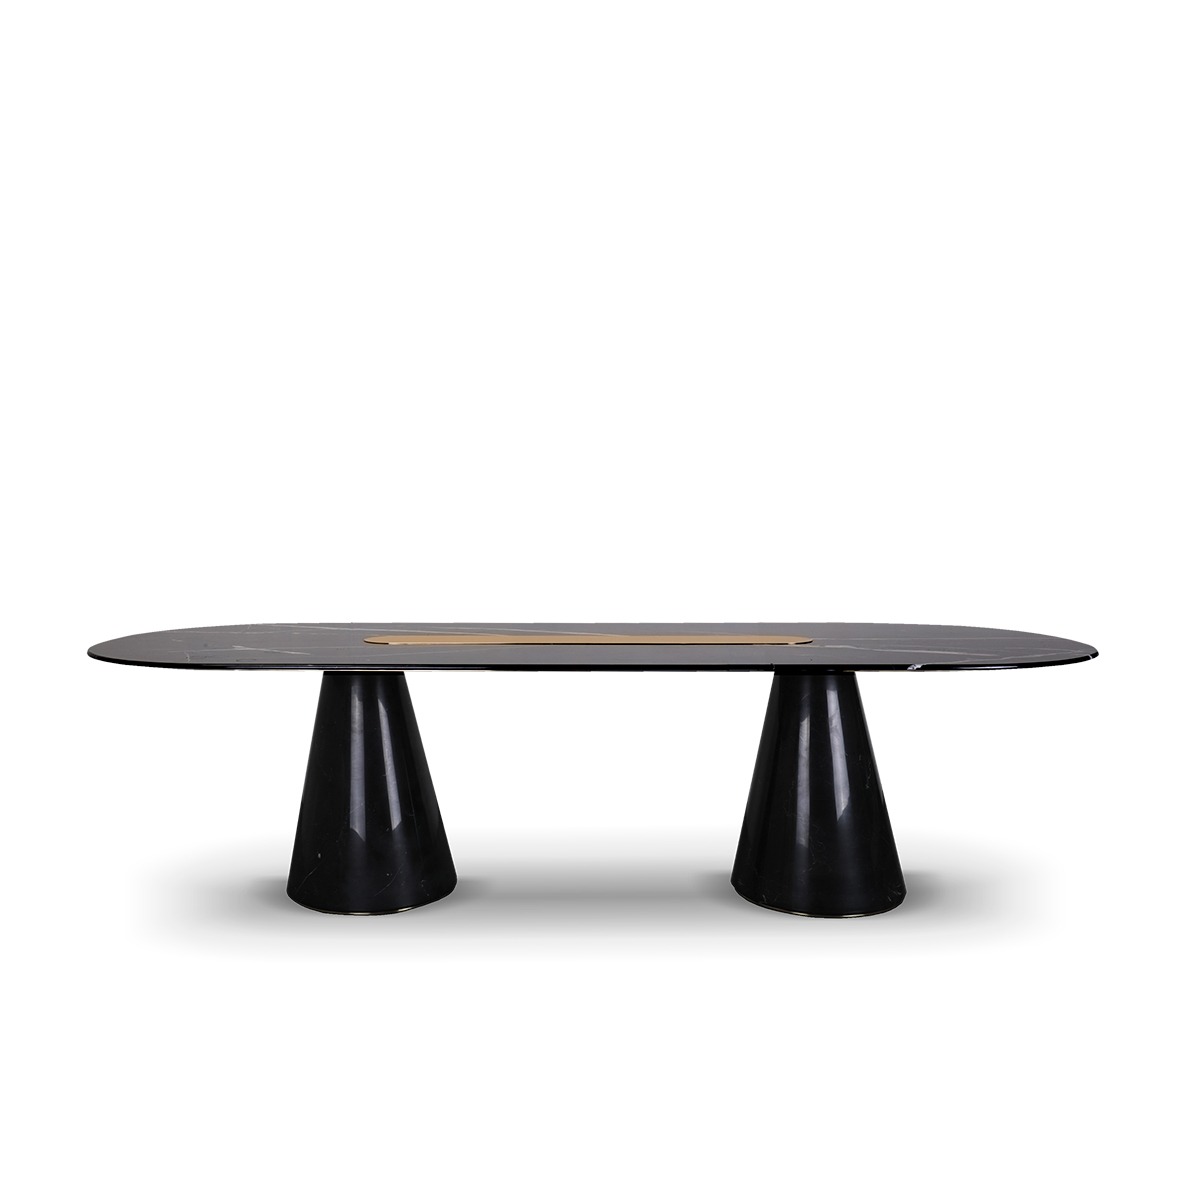 EH bertoia oval table 01 Bertoia Dining Table